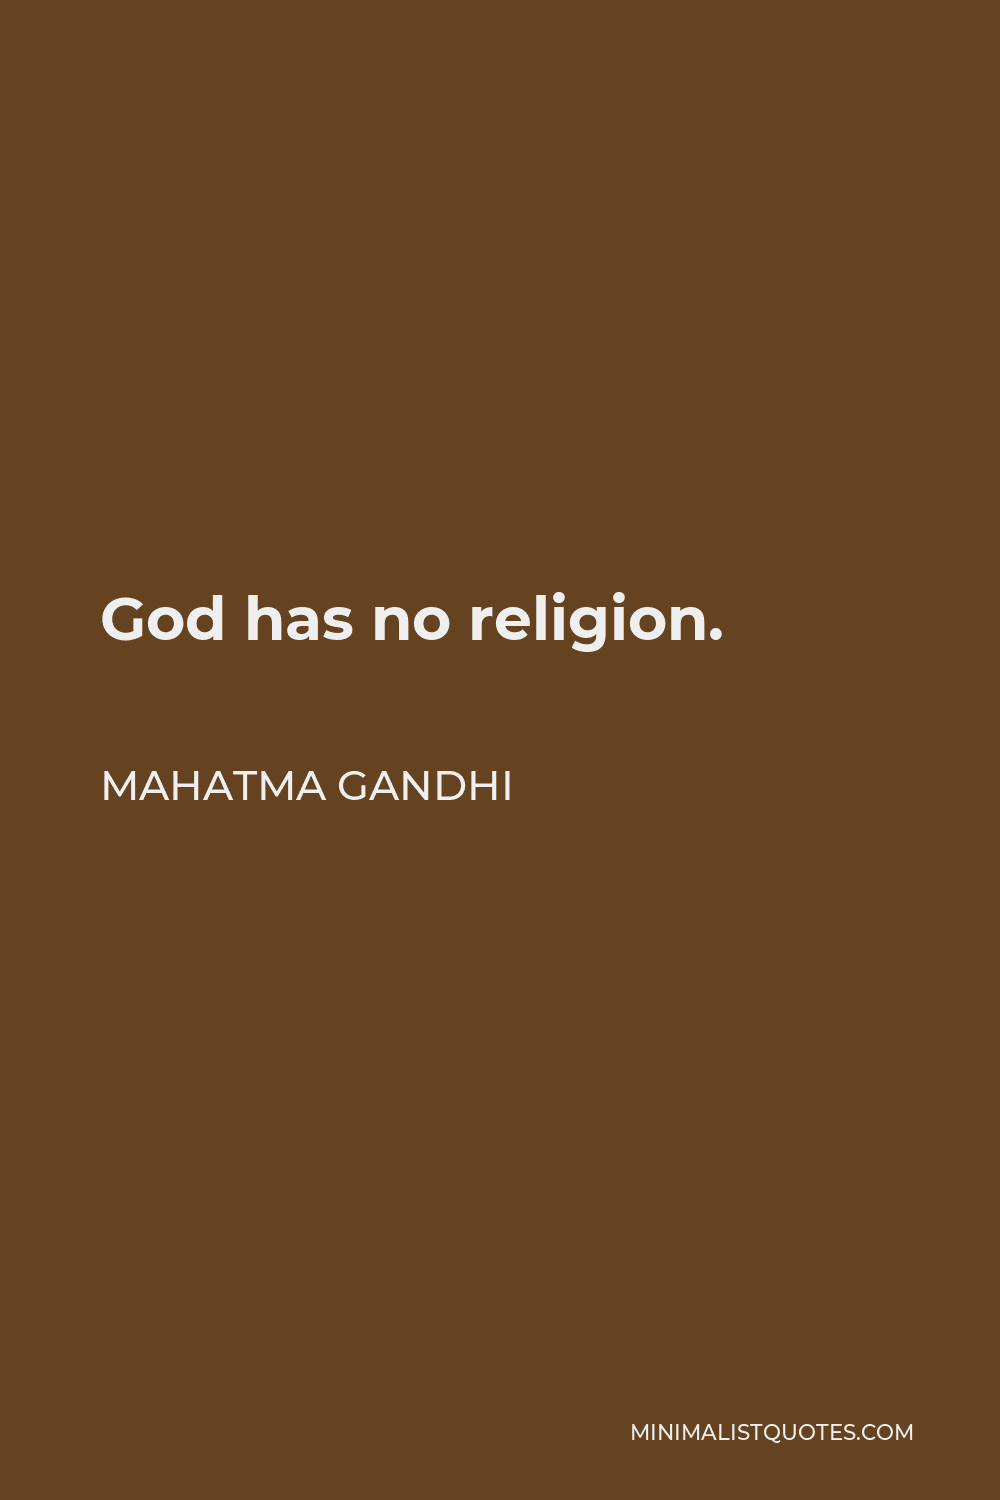 Mahatma Gandhi Quote - God has no religion.